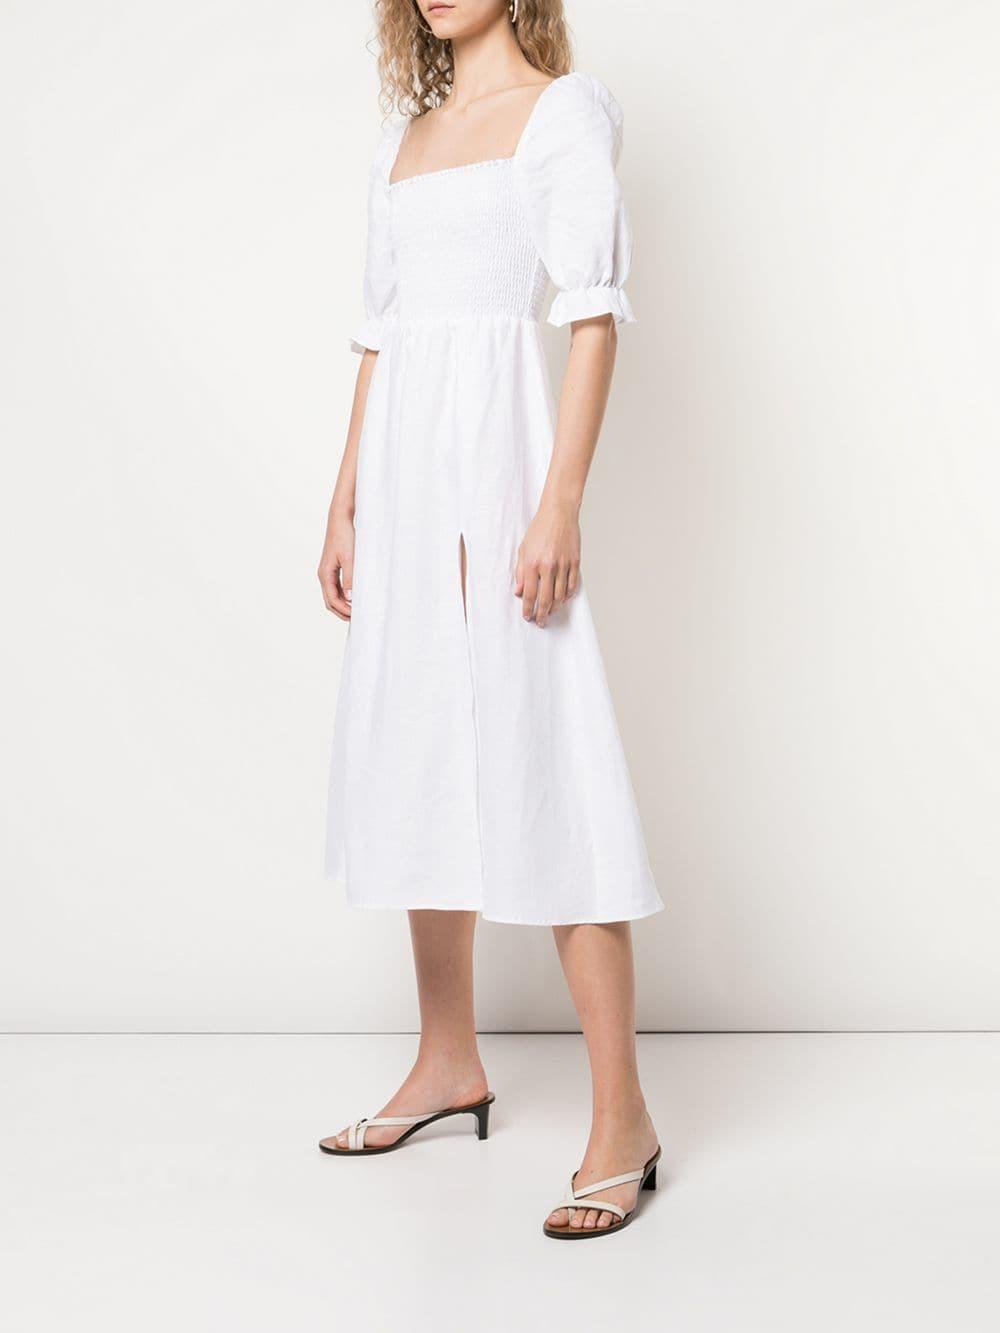 Reformation Marabella Dress in White - Lyst